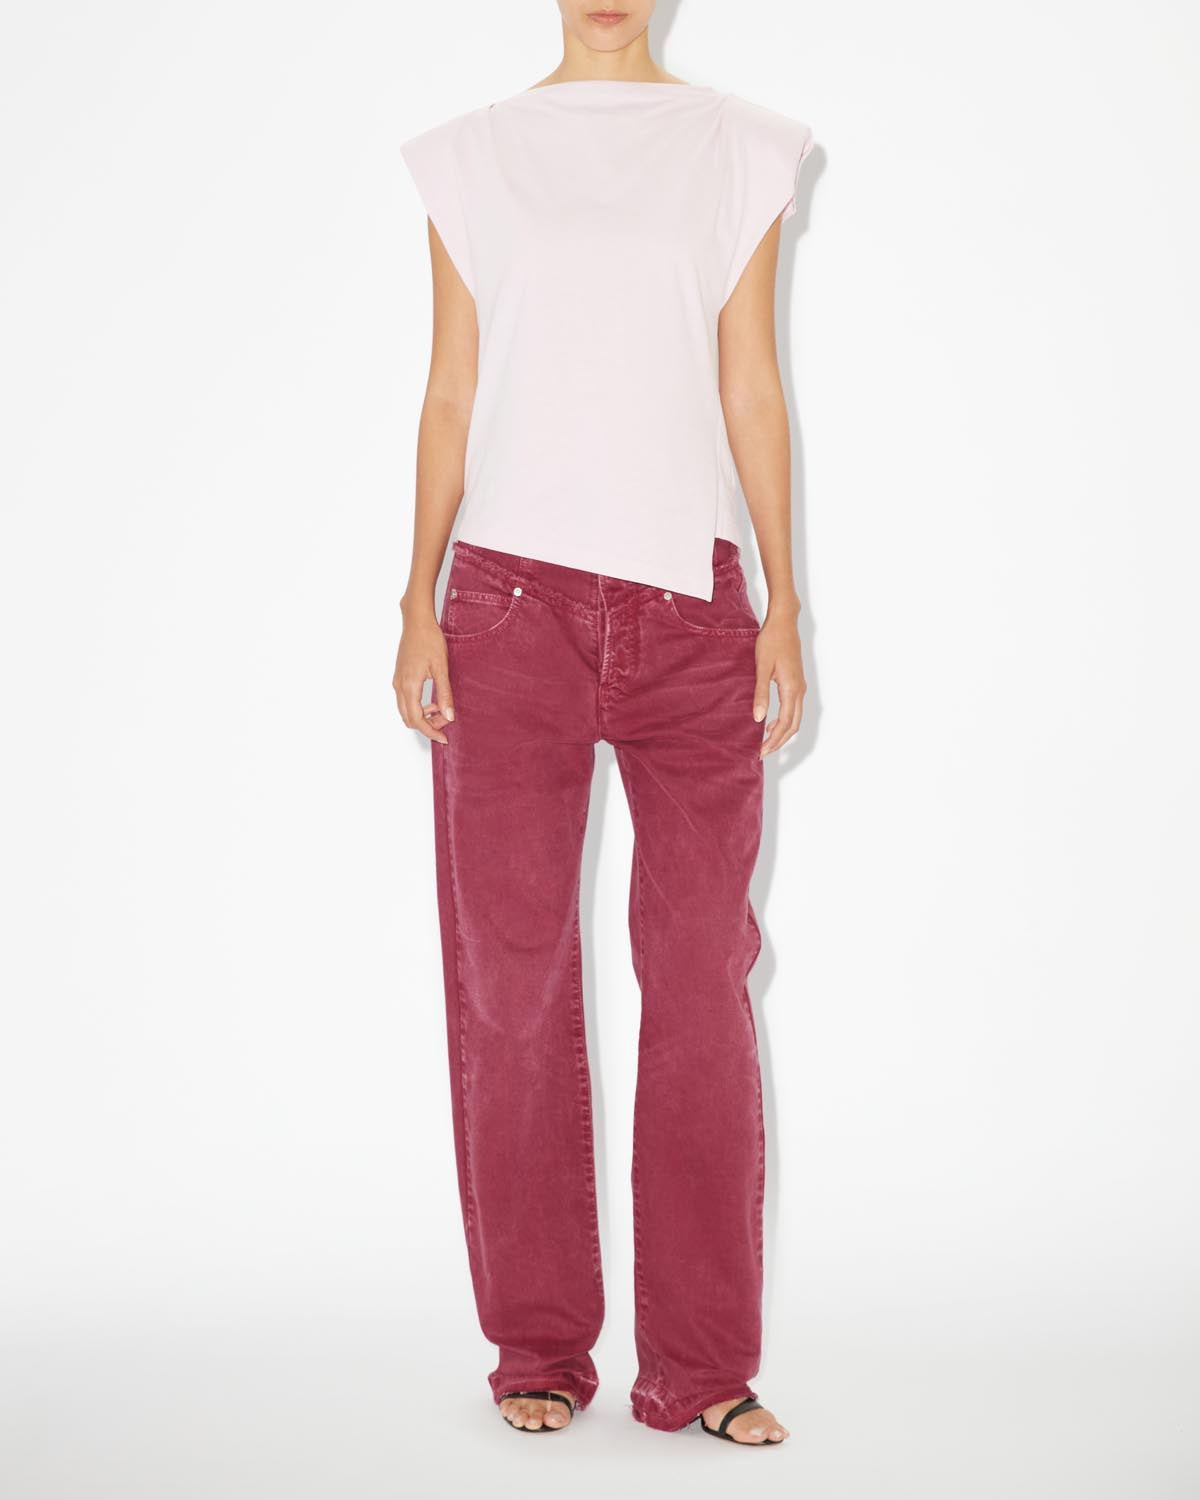 Sebani ティーシャツ Woman Light pink 2